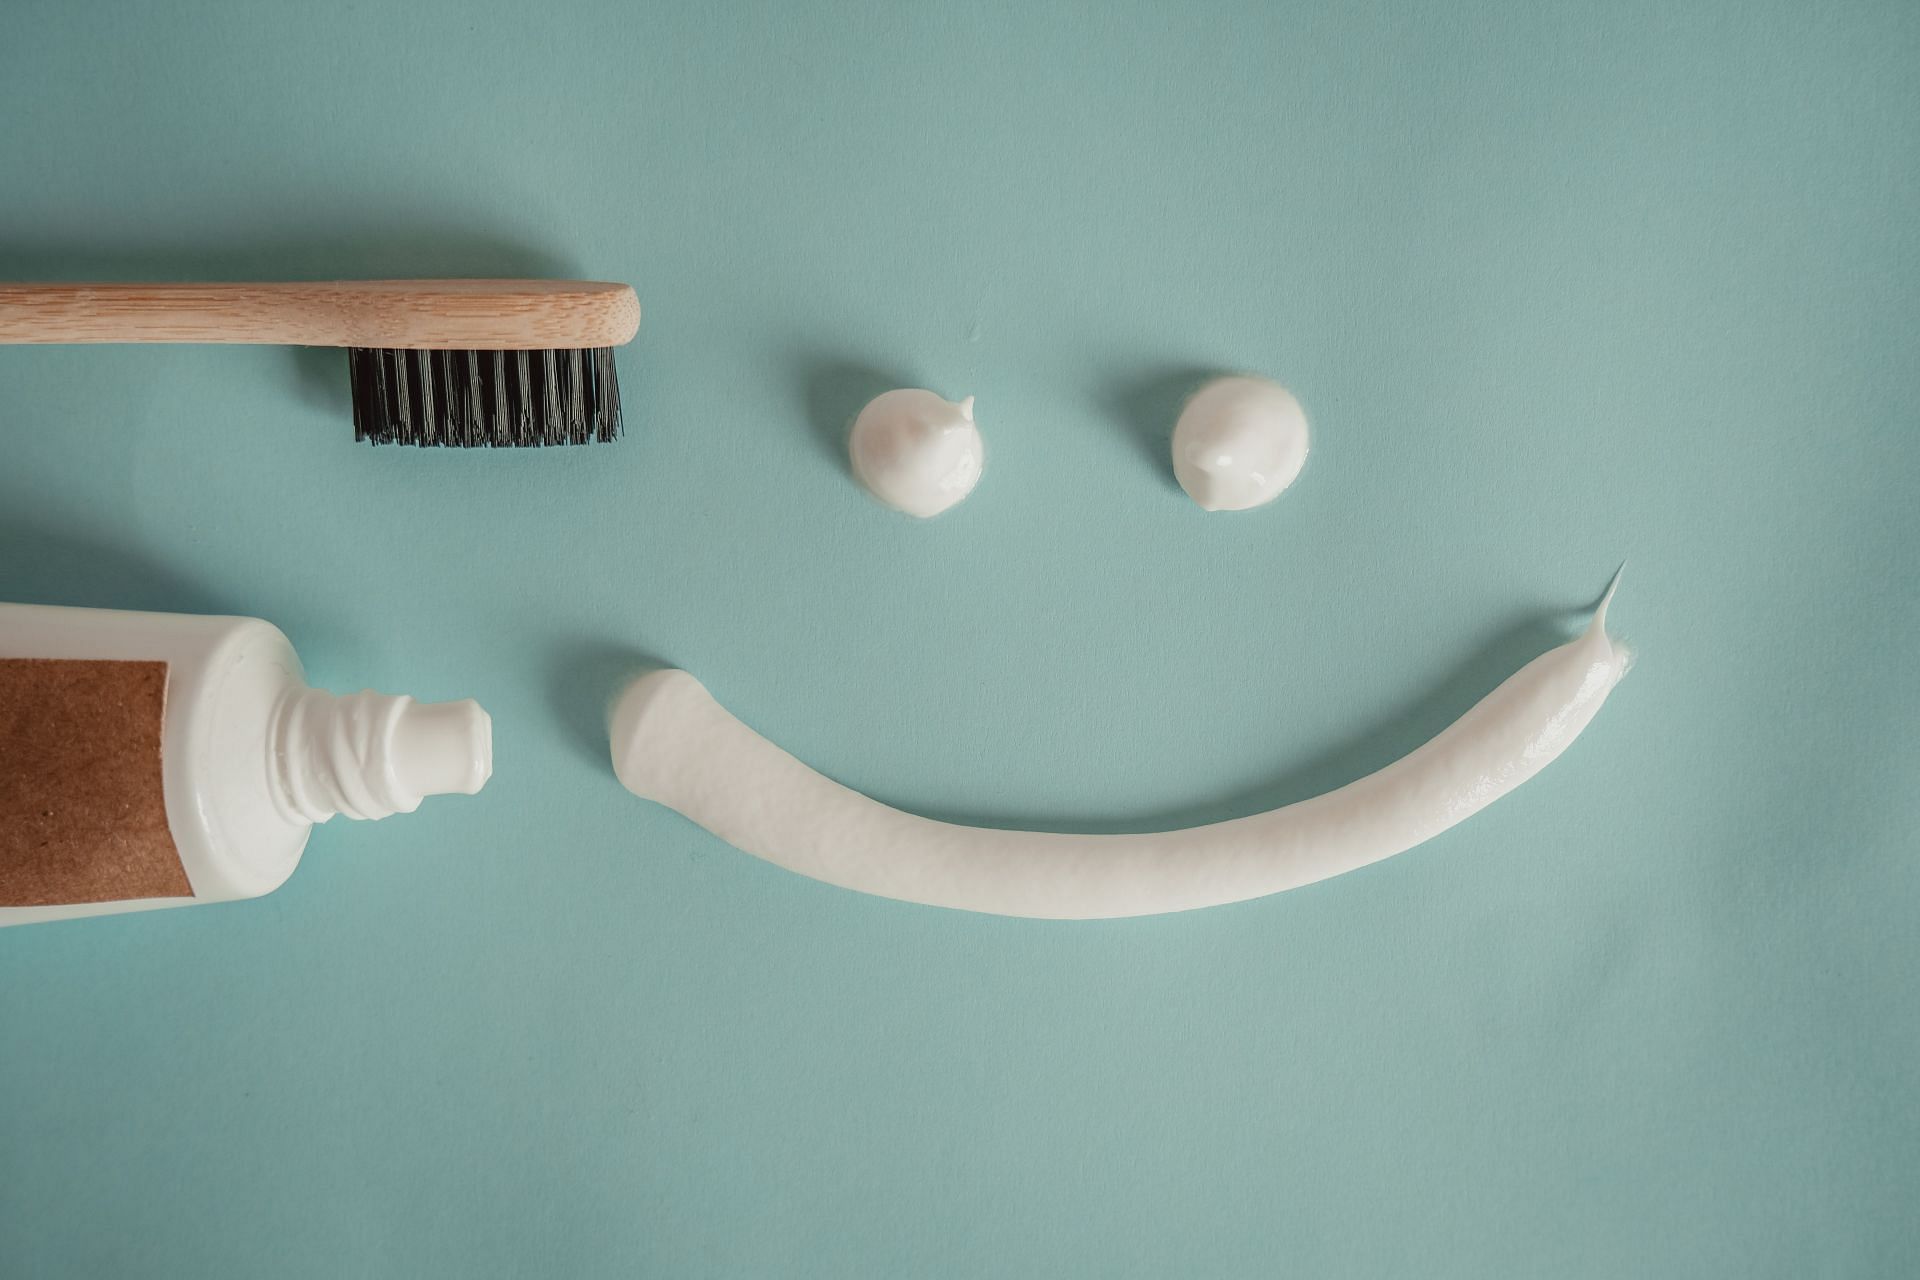 Fluoride in toothpaste can prevent decays. (Image via Pexels/ Işıl Agc)